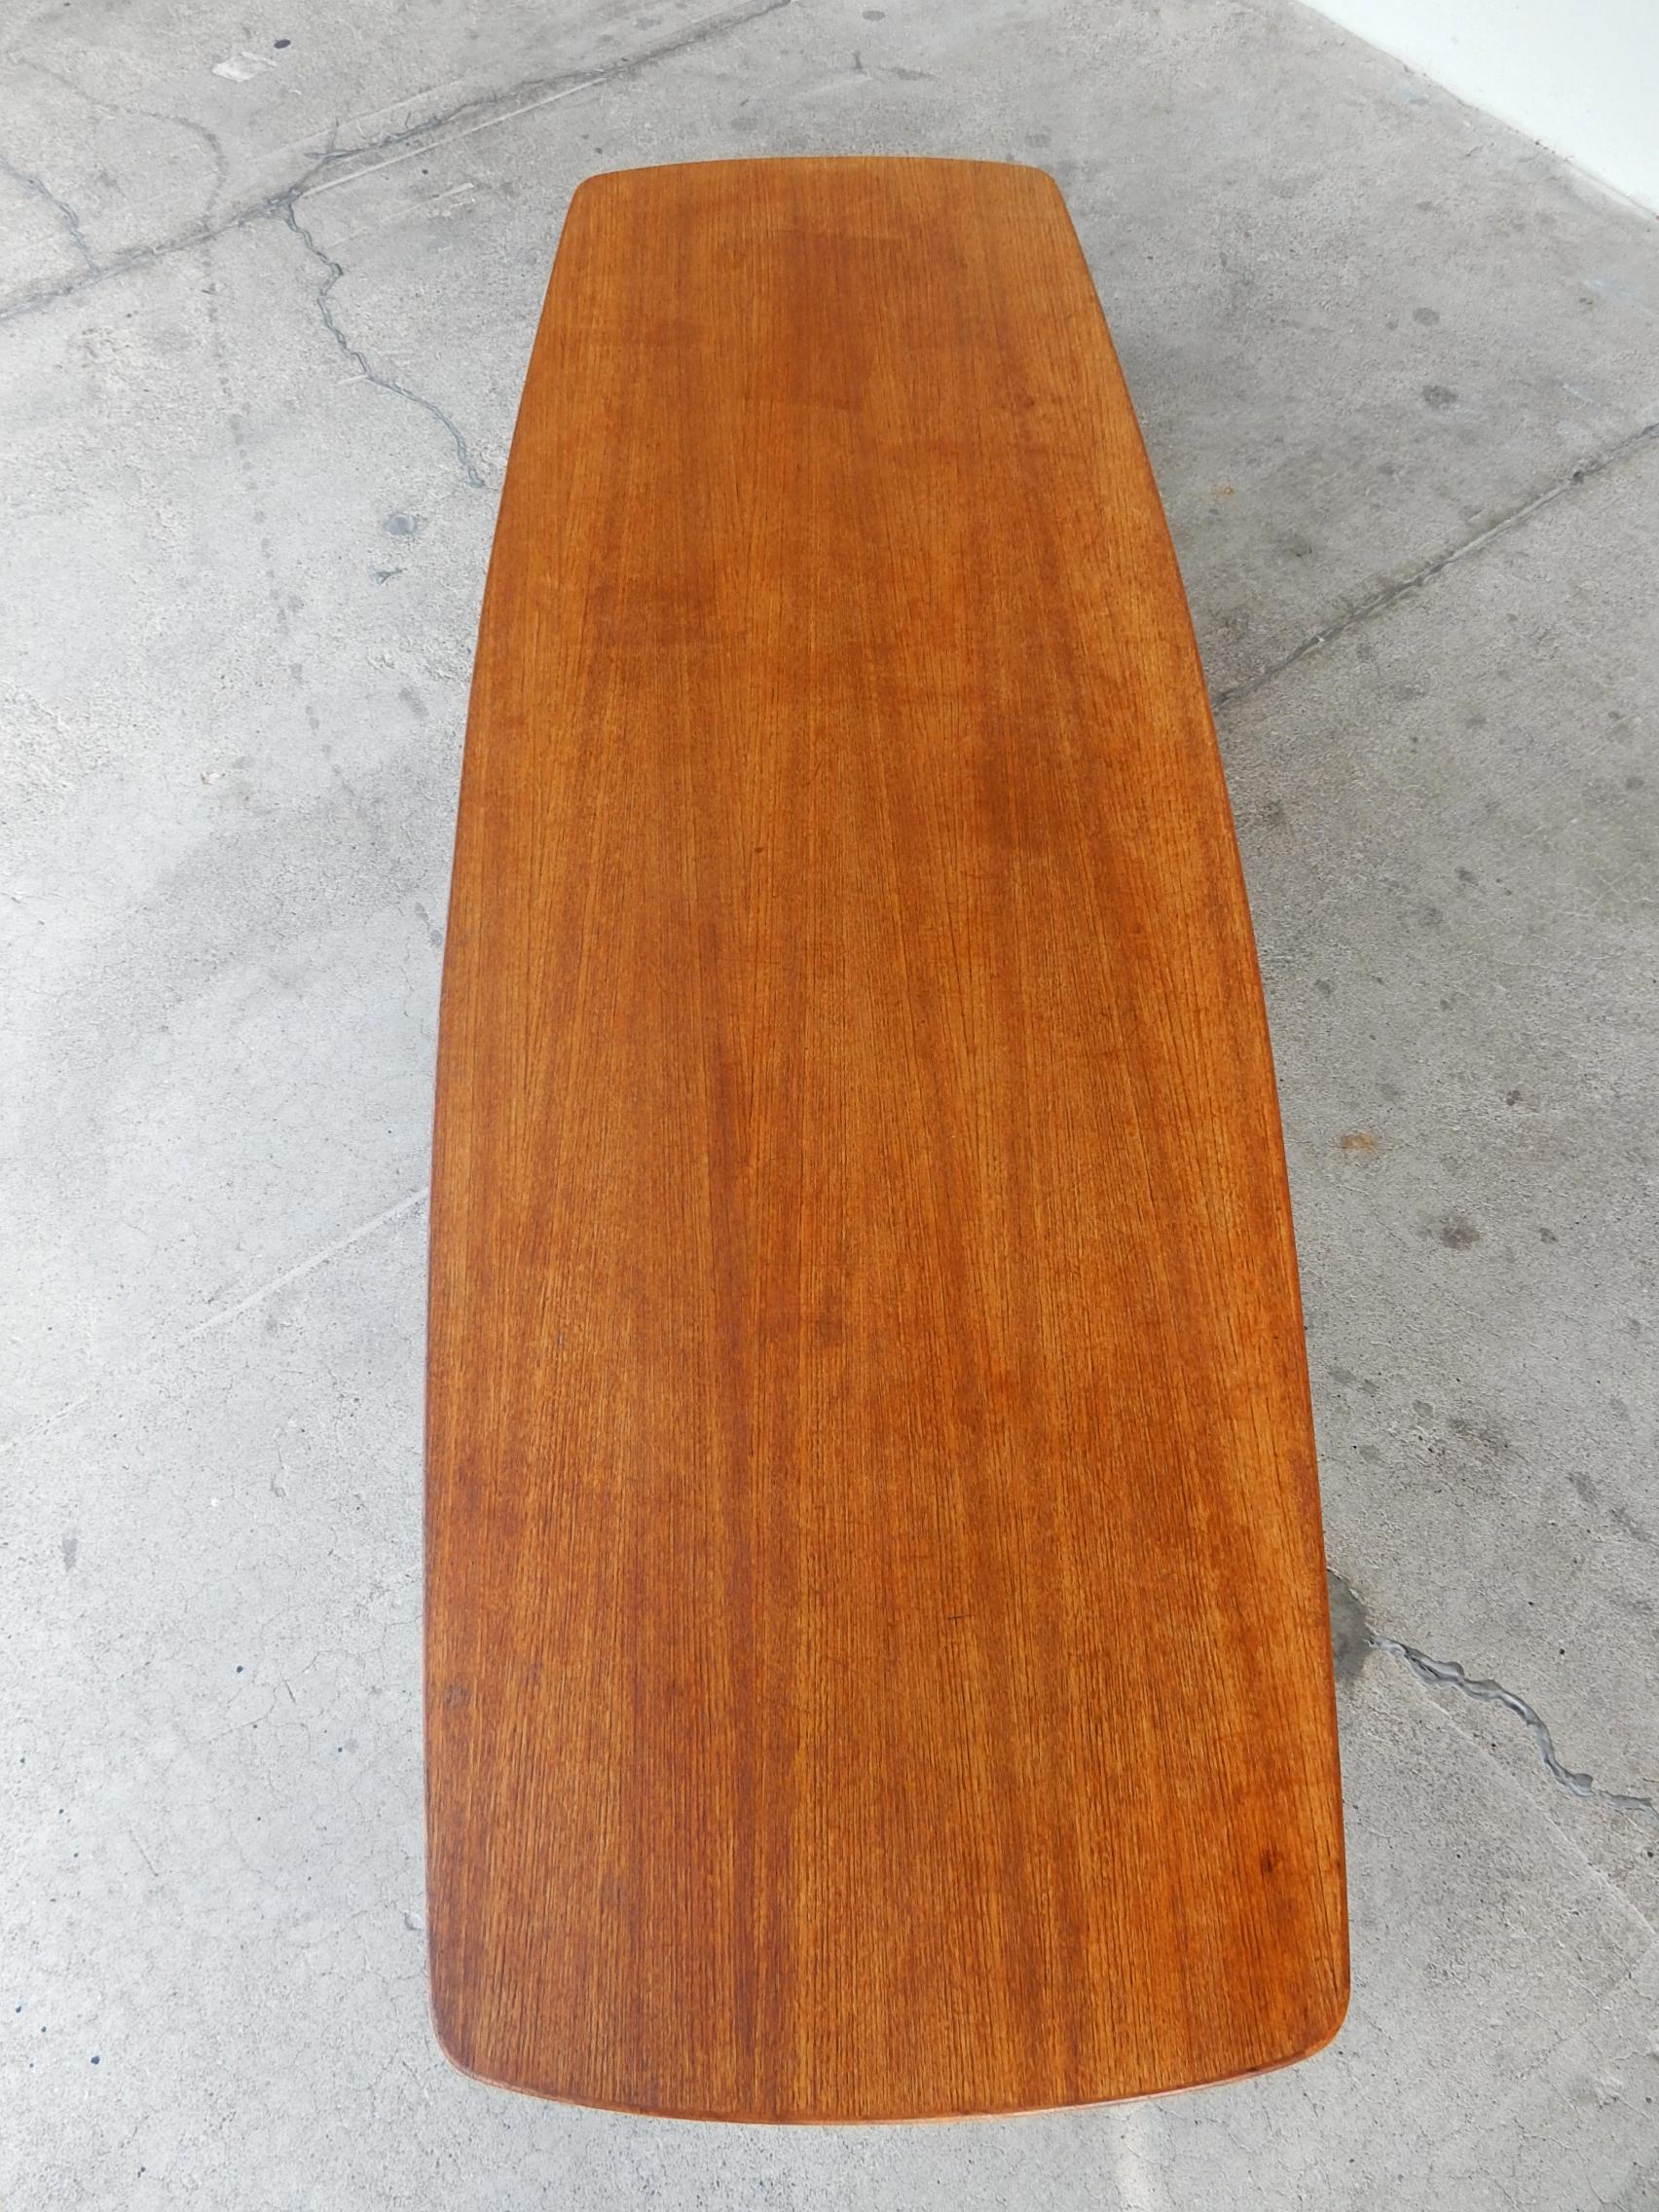 1950's Danish Modern Sculpted Leg Surfboard Cocktail Table by Kurt Østervig For Sale 1